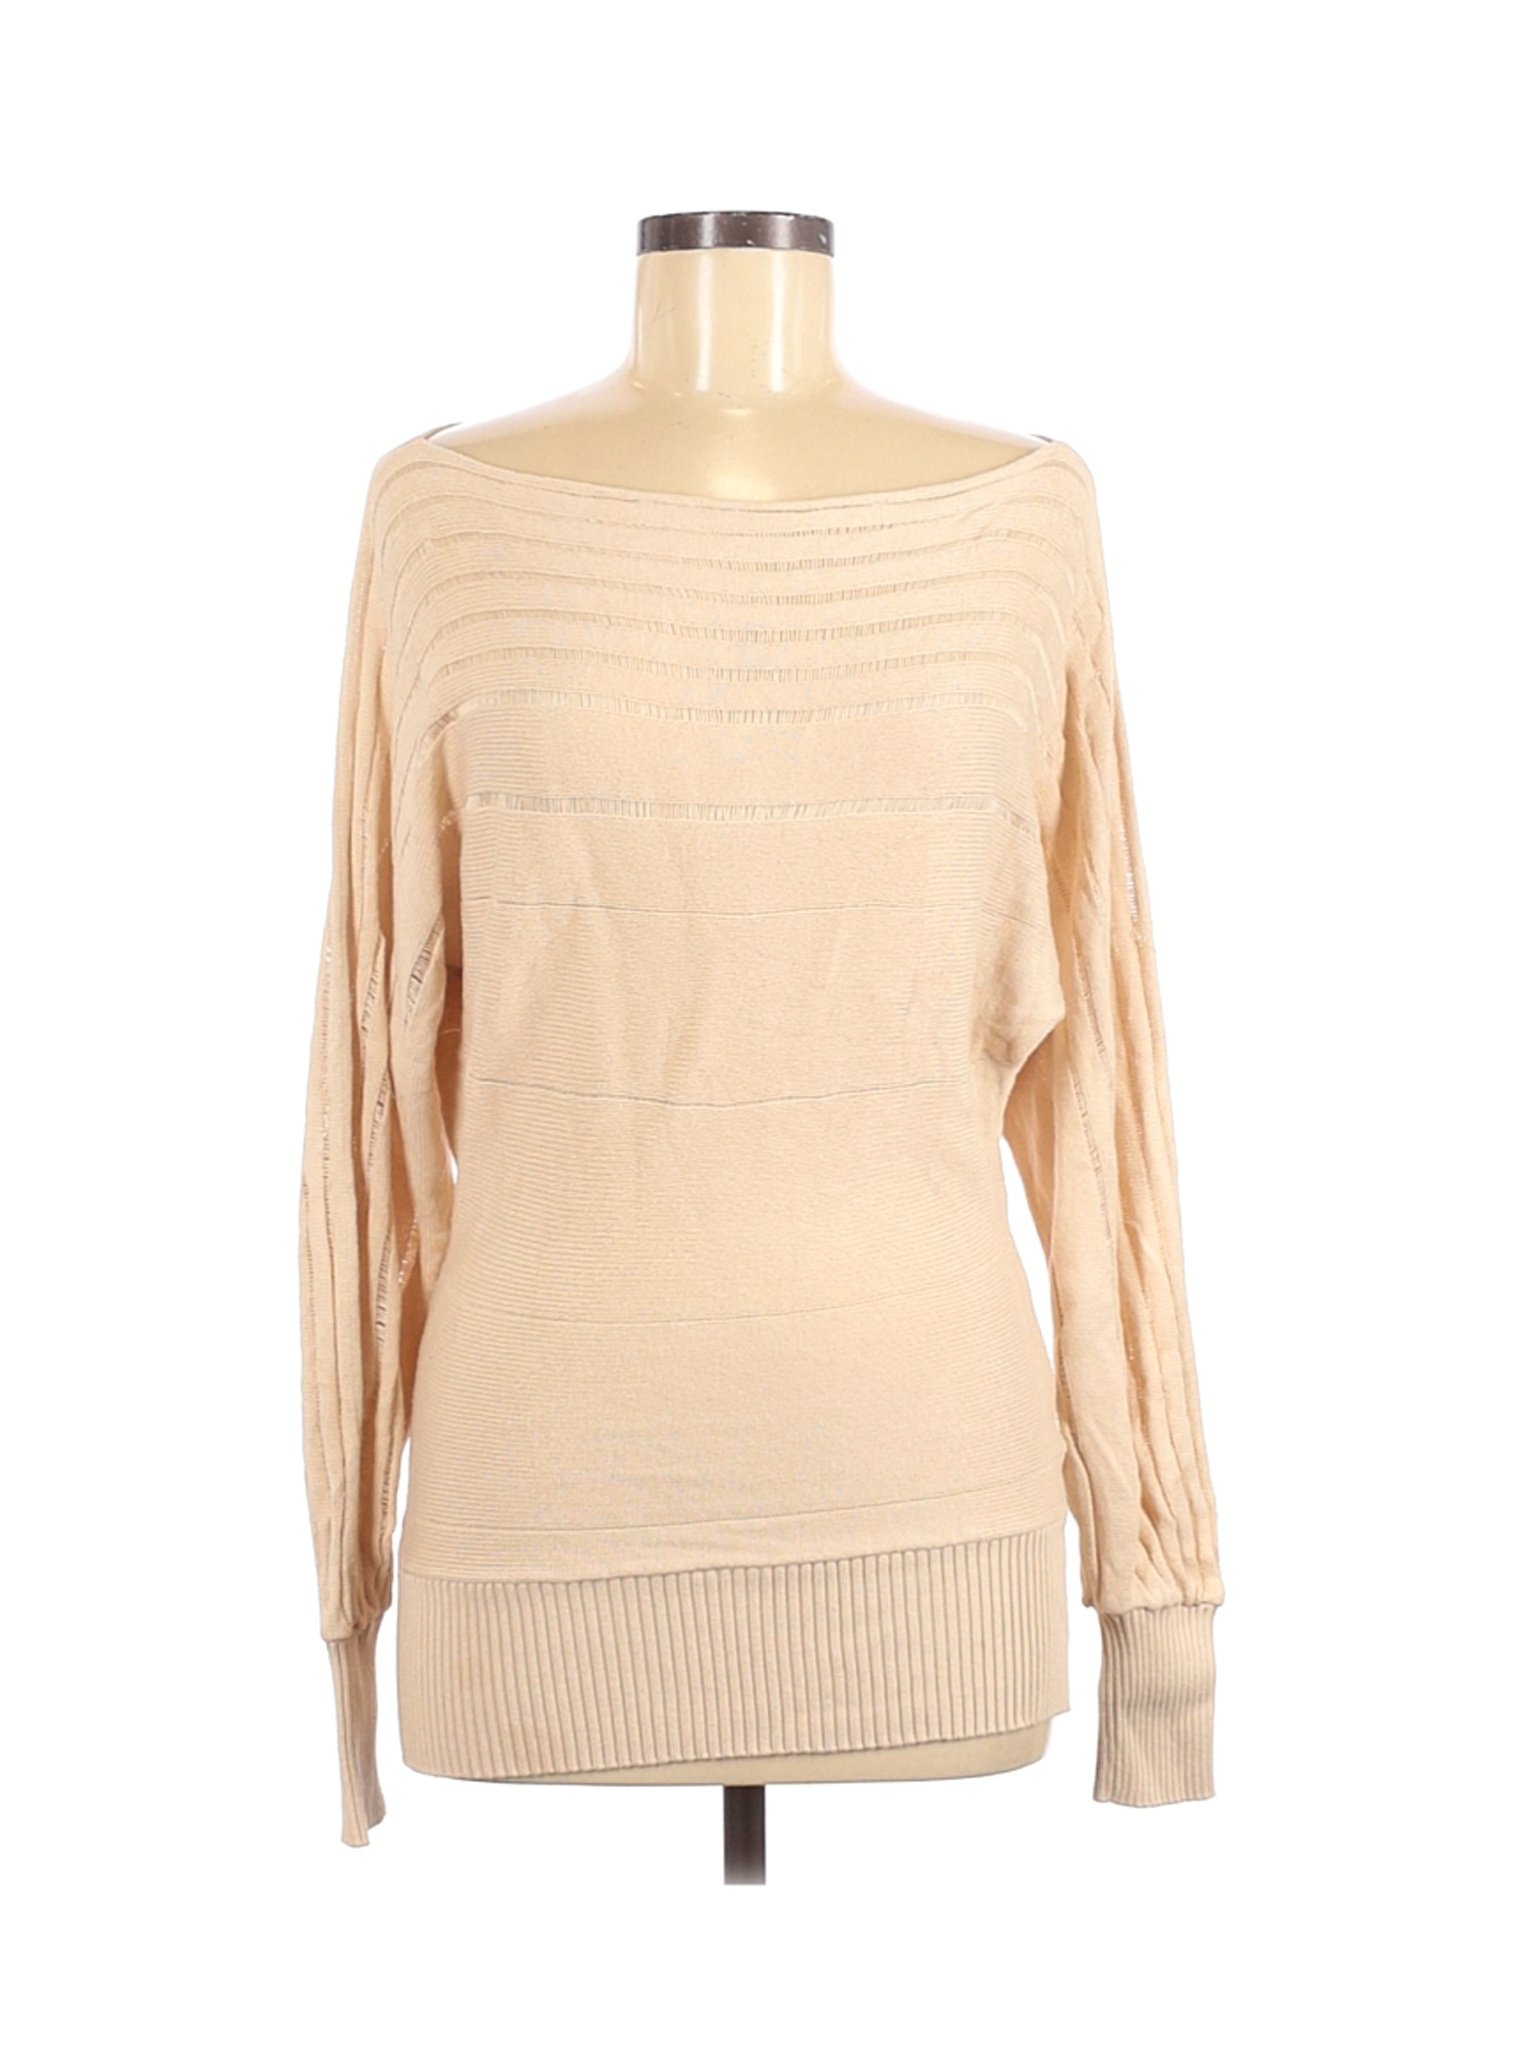 Patty Boutik Women Brown Pullover Sweater M | eBay